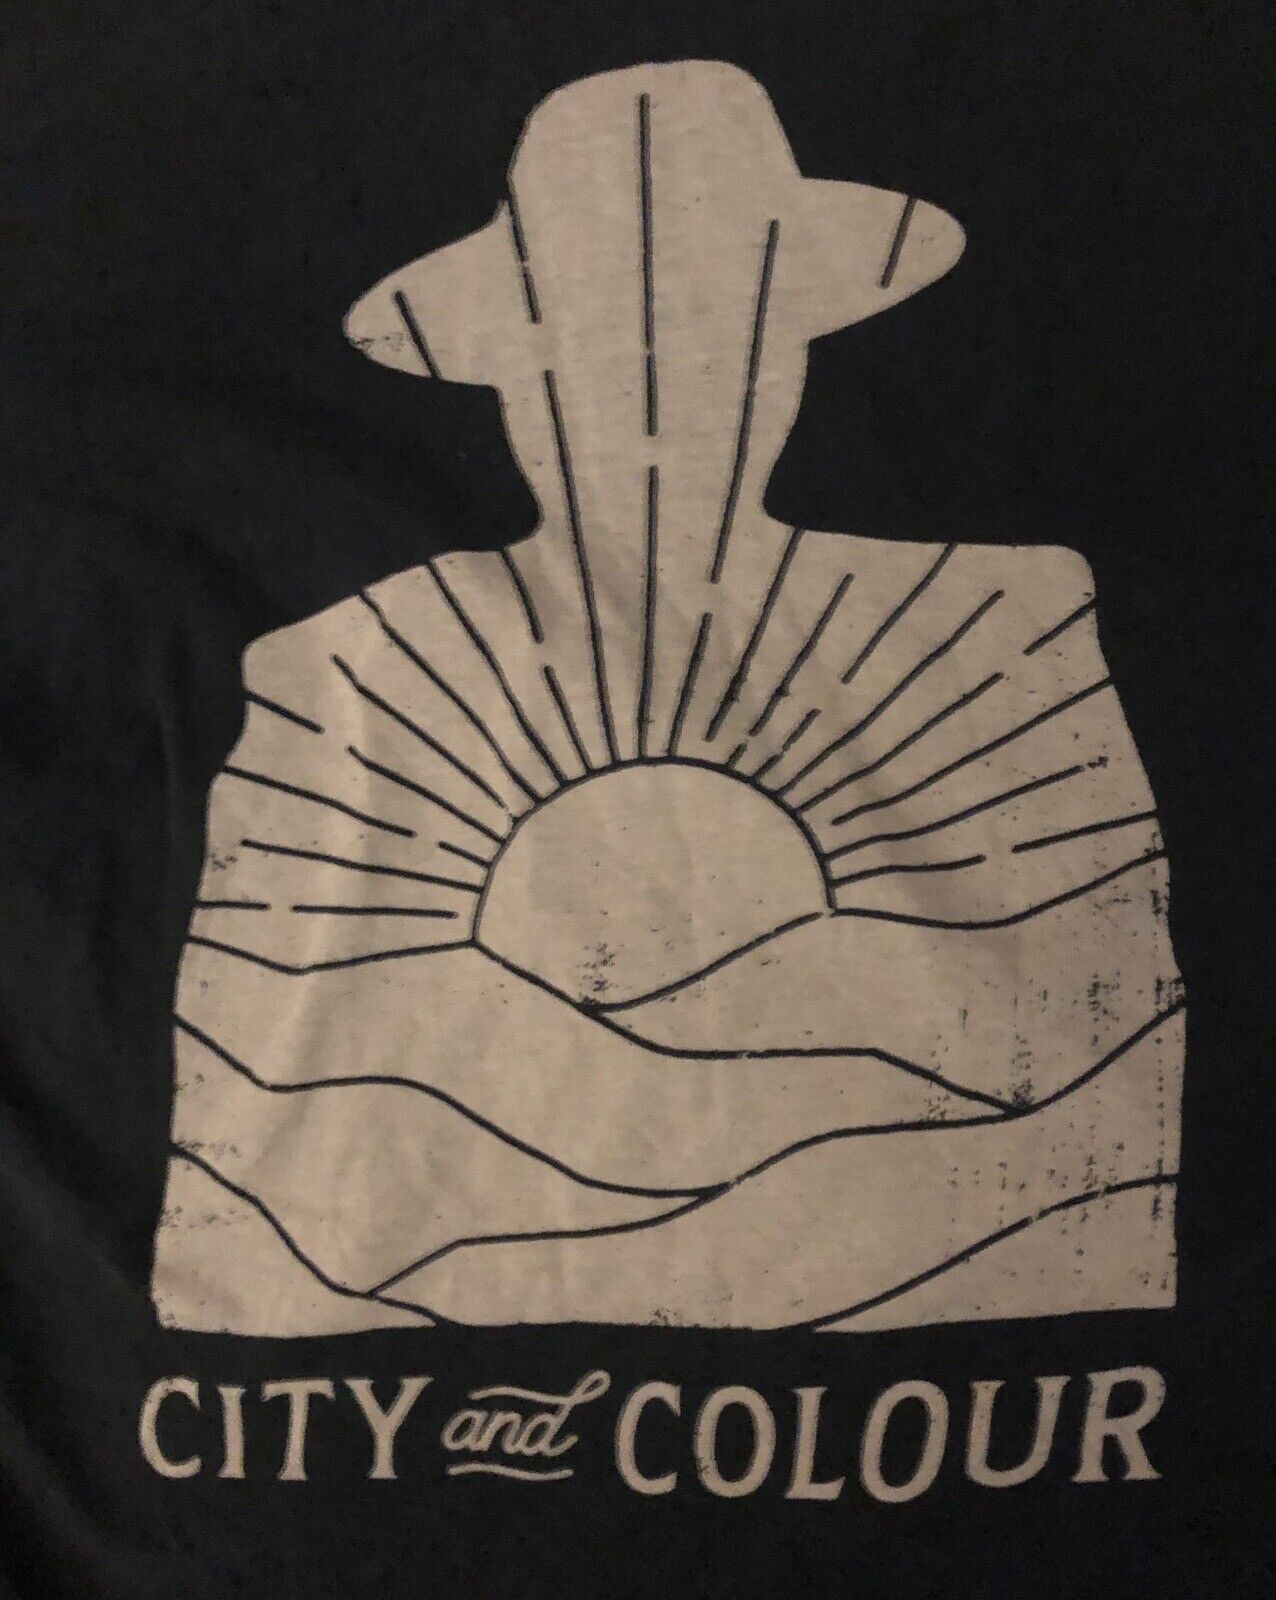 city and colour alexisonfire Silhouette With Sun Small shirt Dallas Green Black